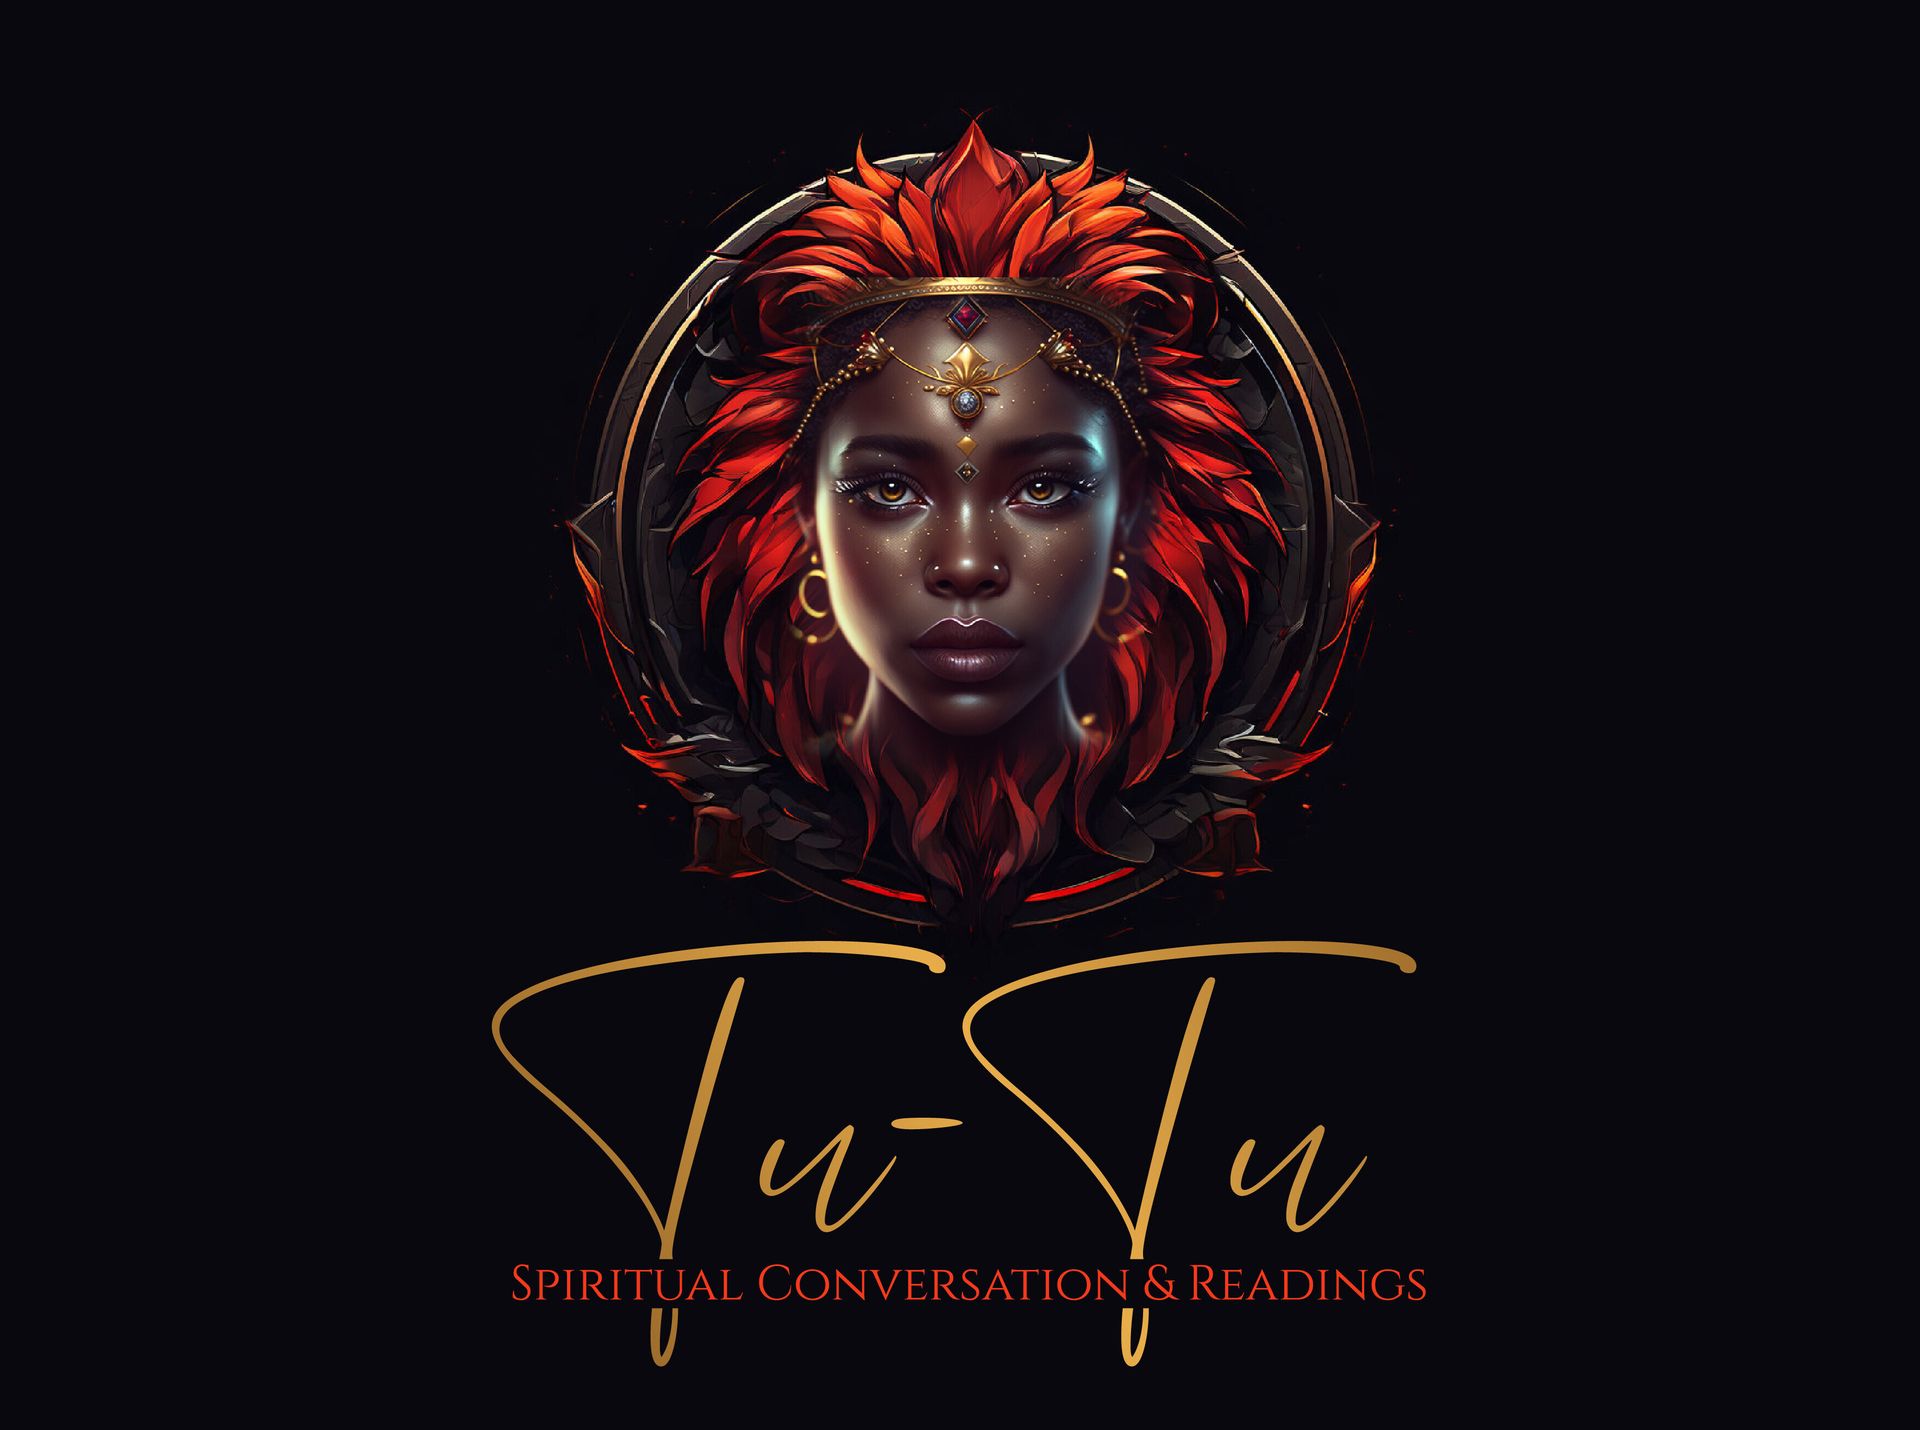 Spiritual Readings & Conversations with Tu-Tu